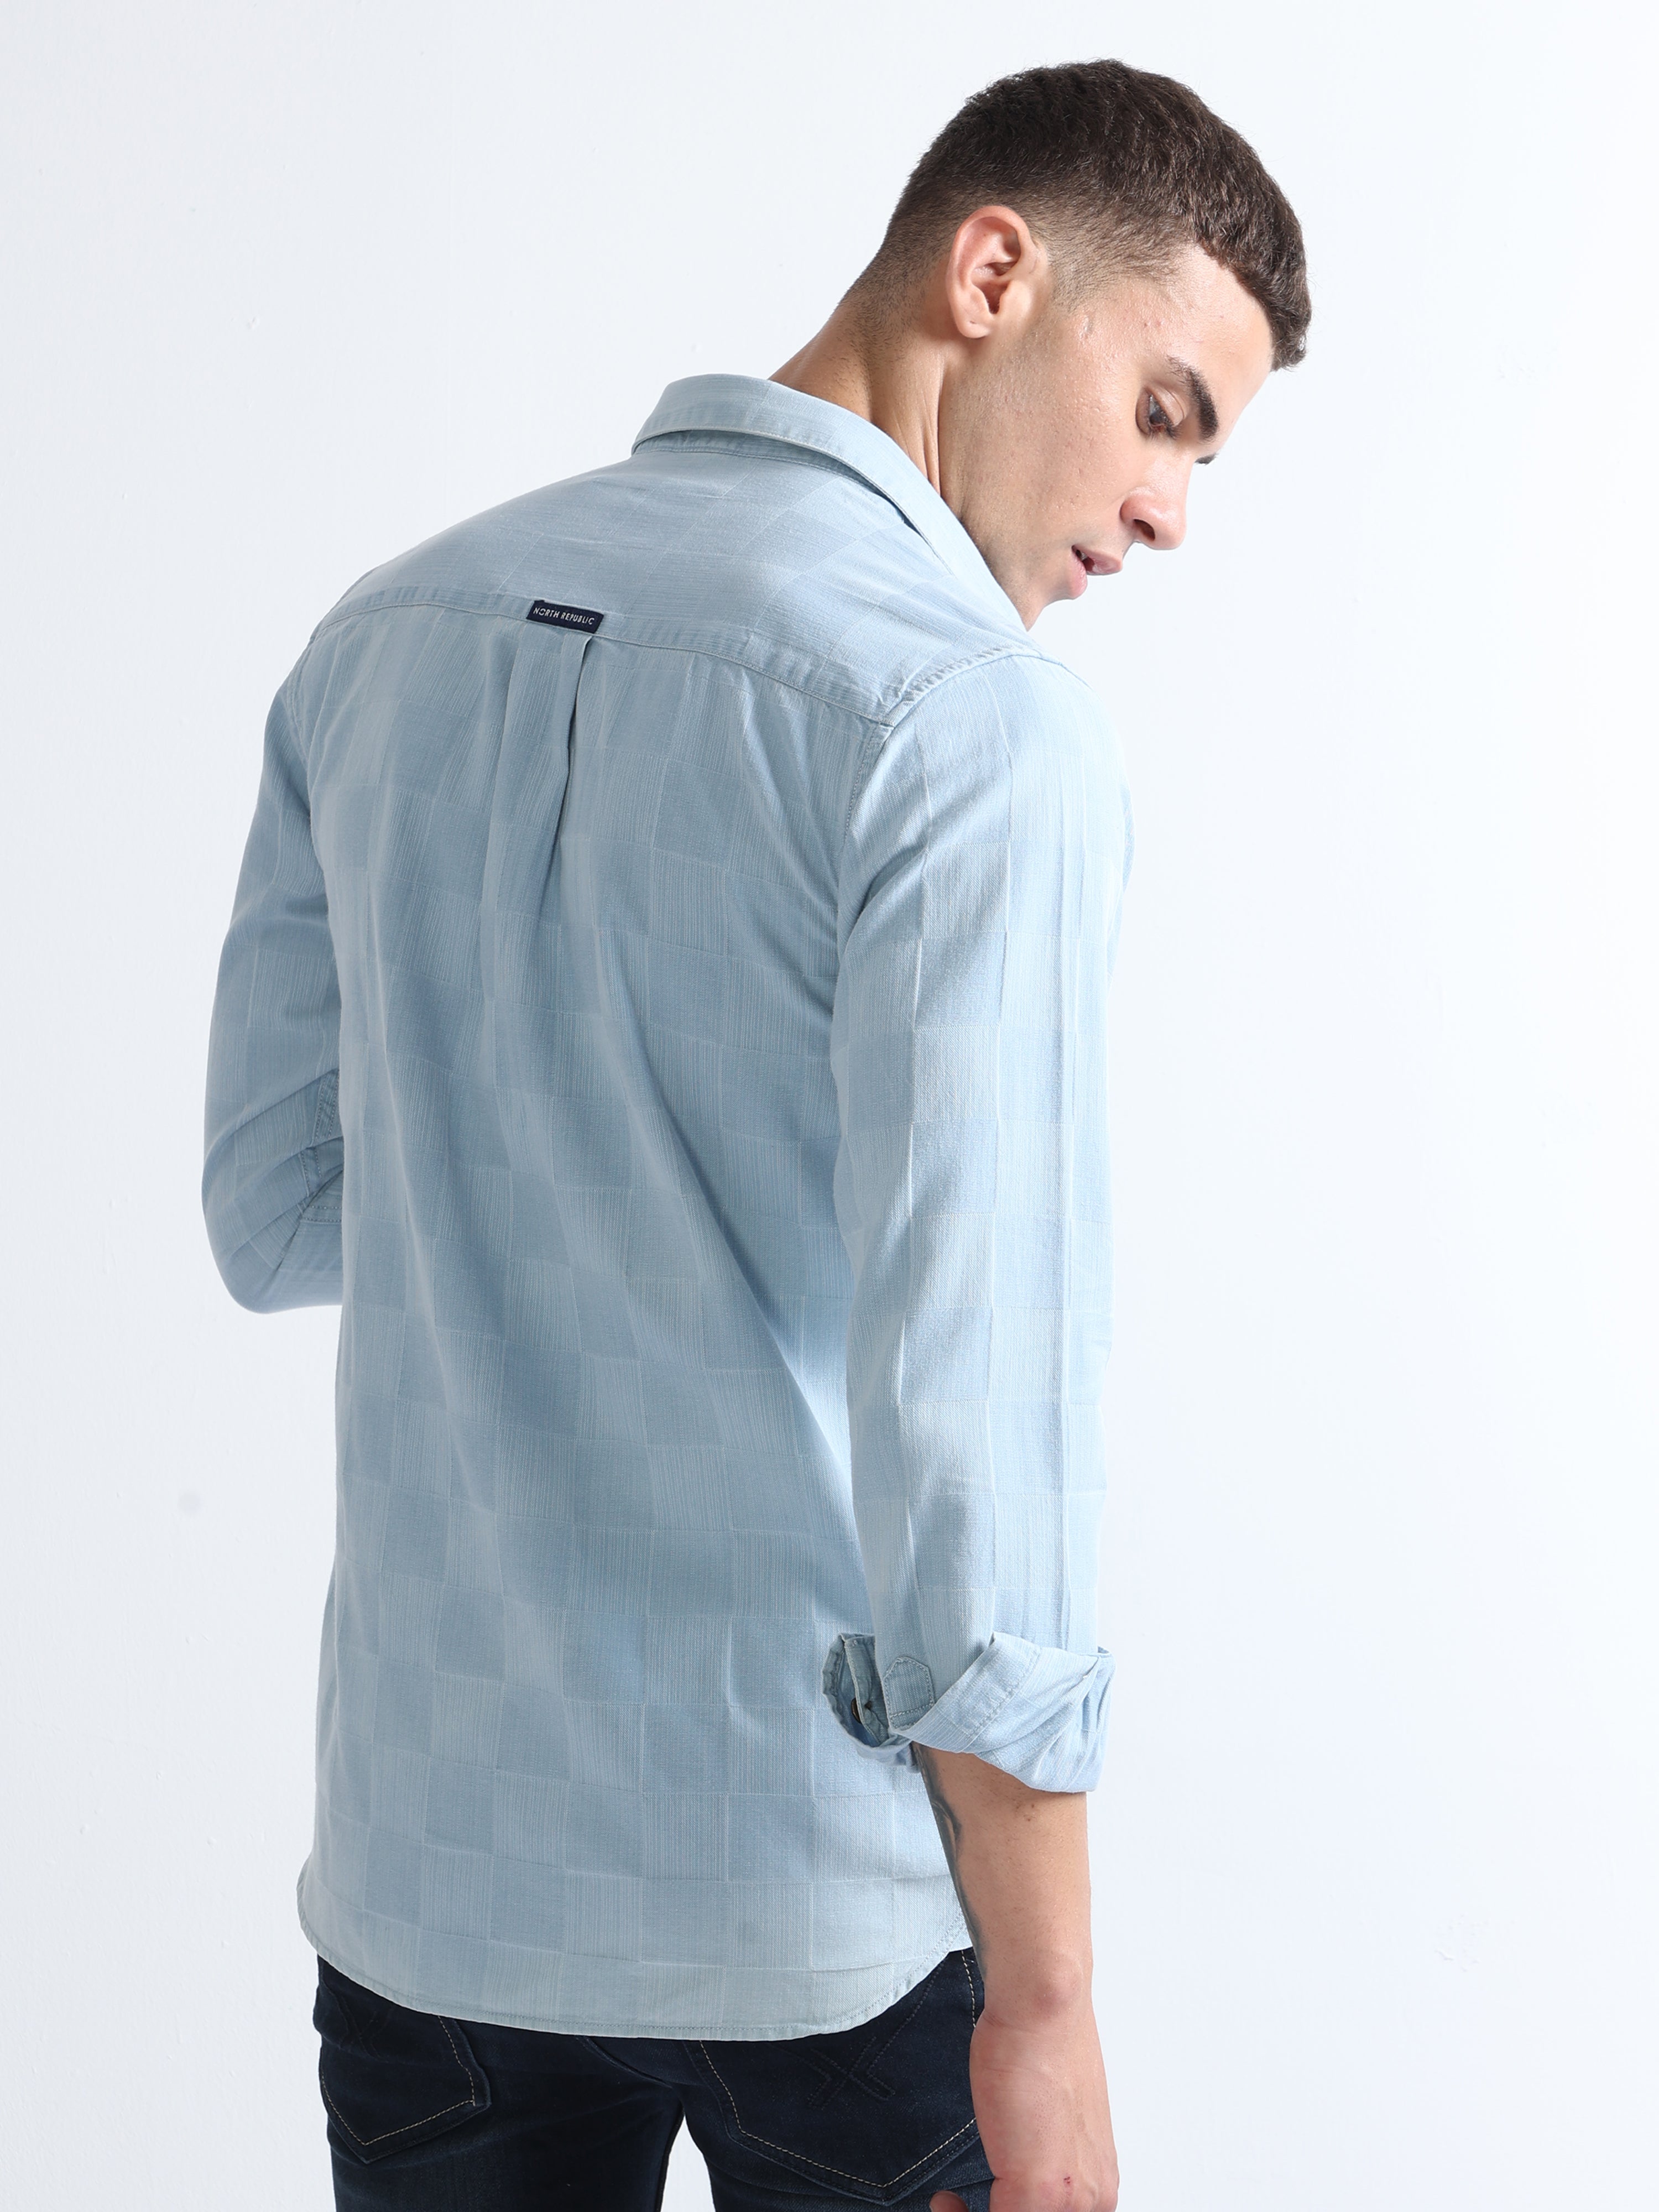 Mens Double-Pocket Fashion Mens Casual Long-Sleeved Denim Shirt Plus Size  Shirt | eBay